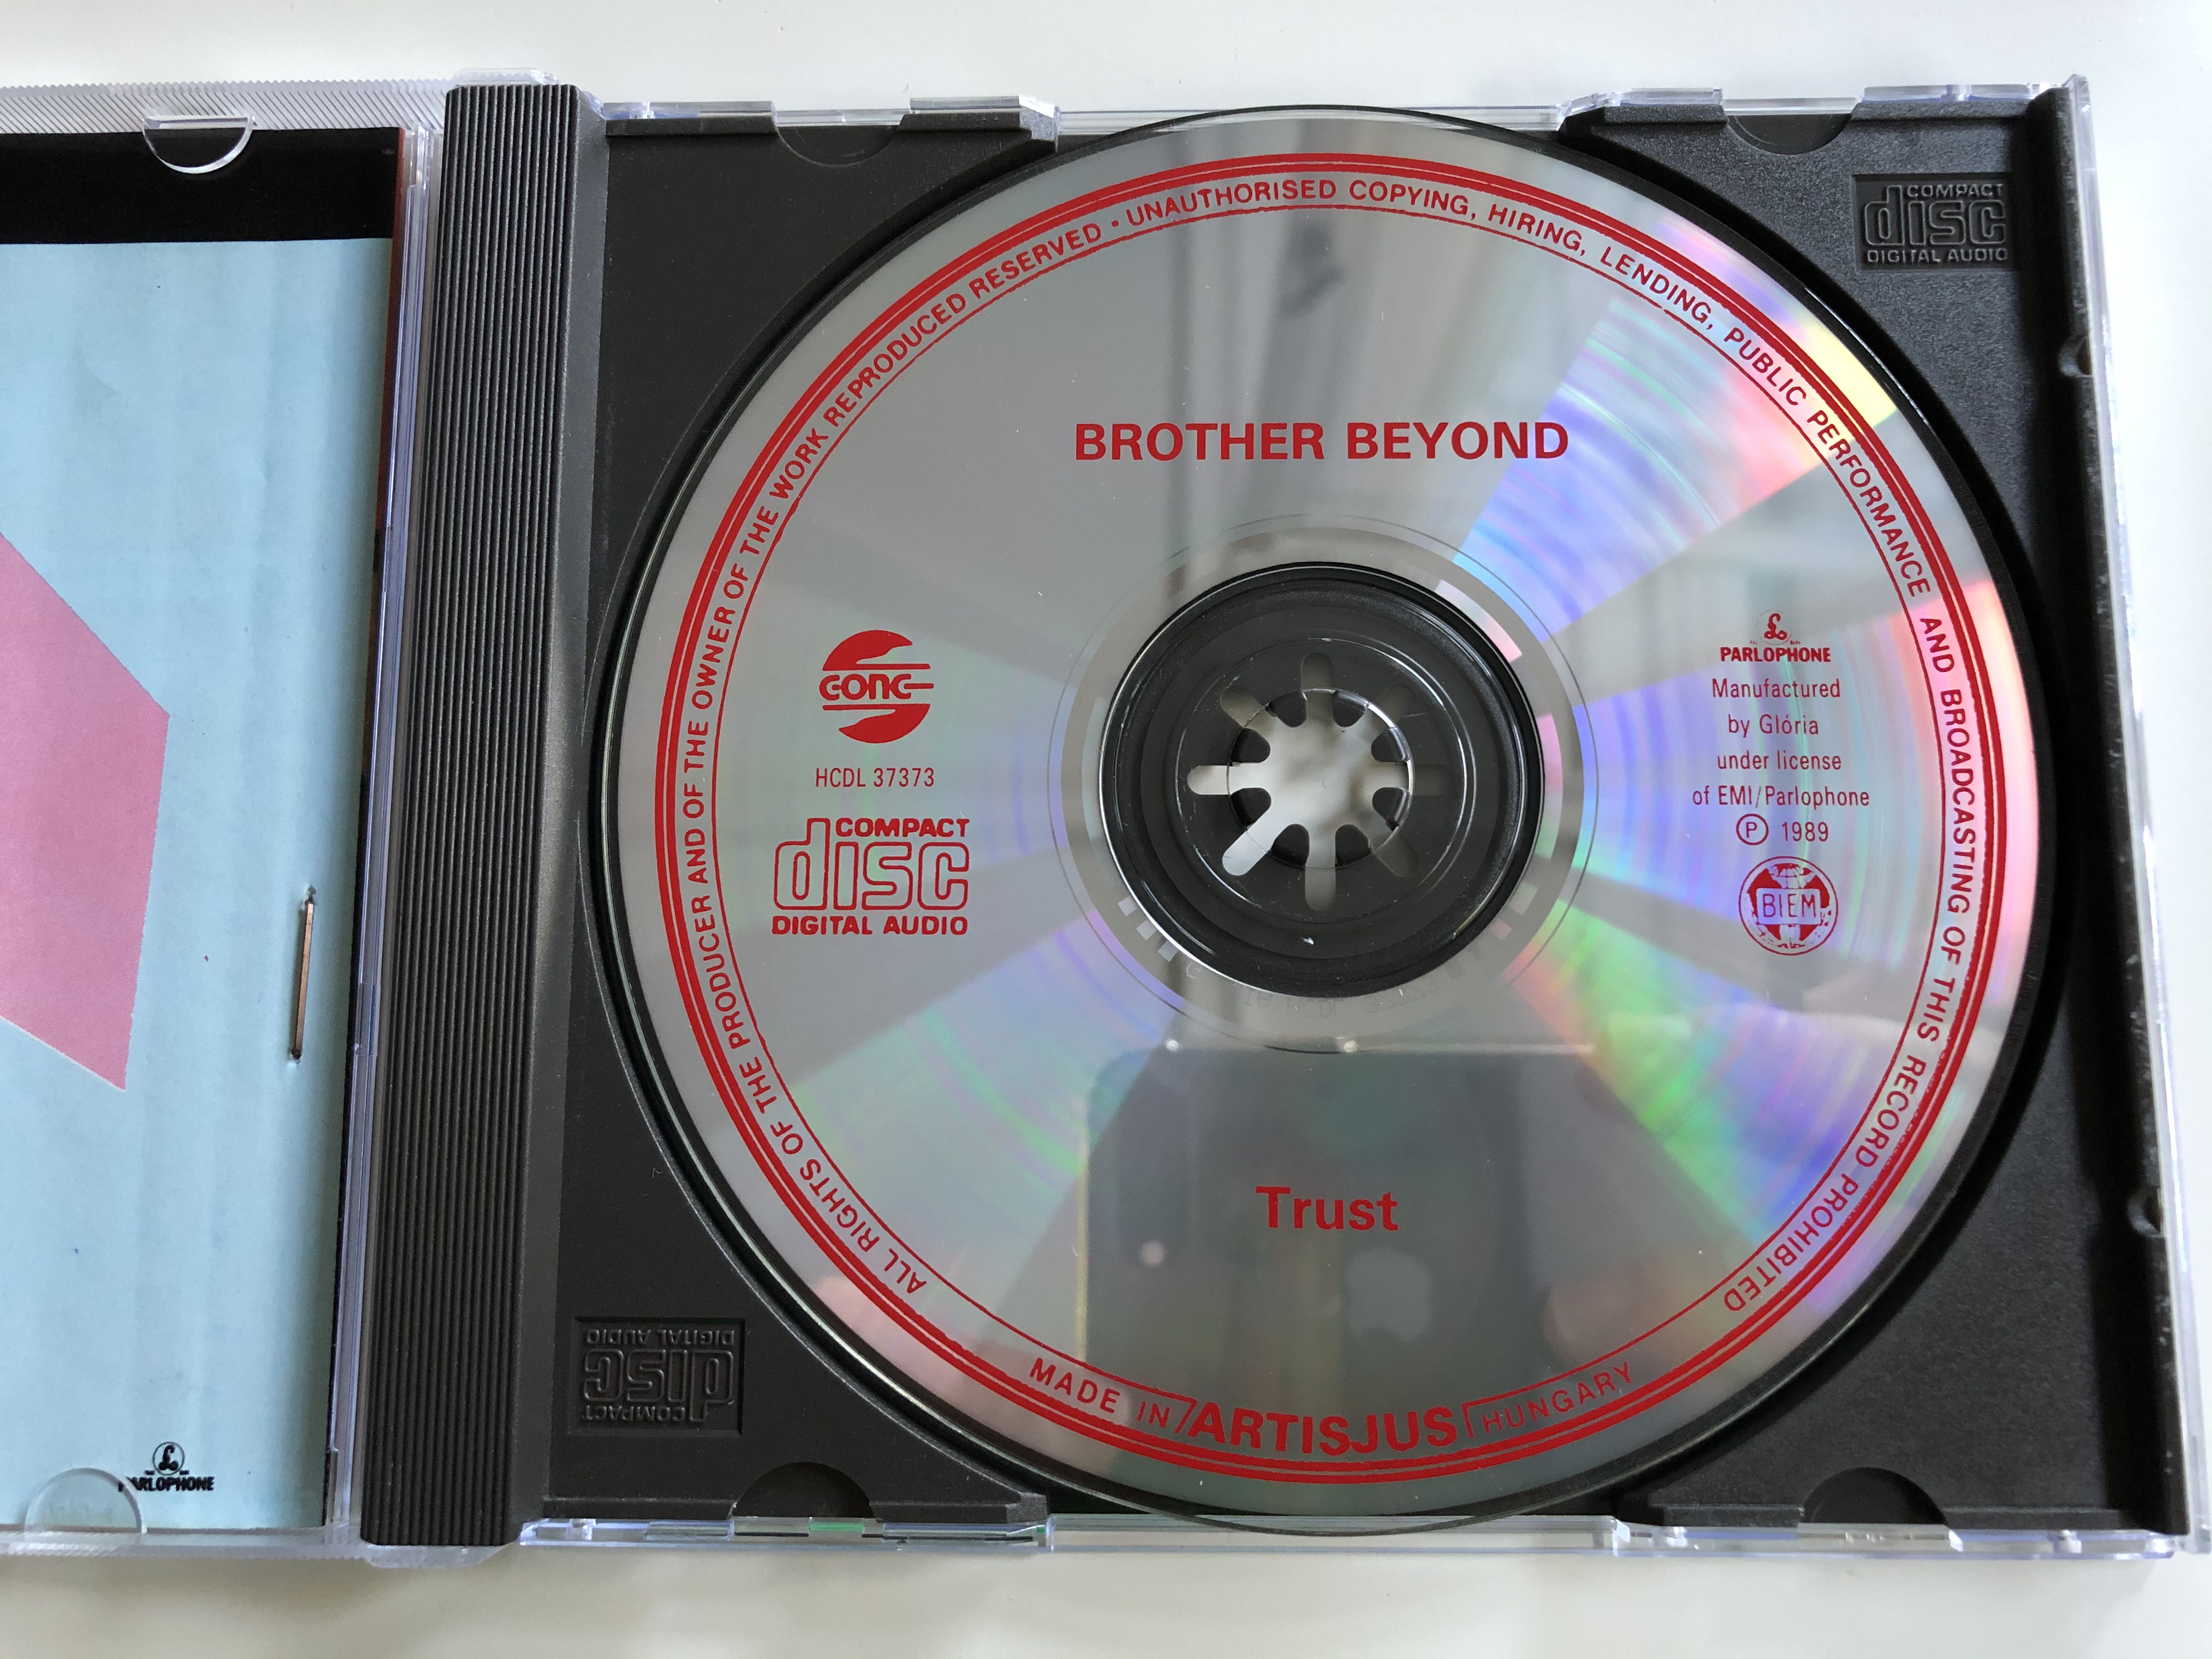 brother-beyond-trust-gong-audio-cd-1989-hcdl-37373-7-.jpg